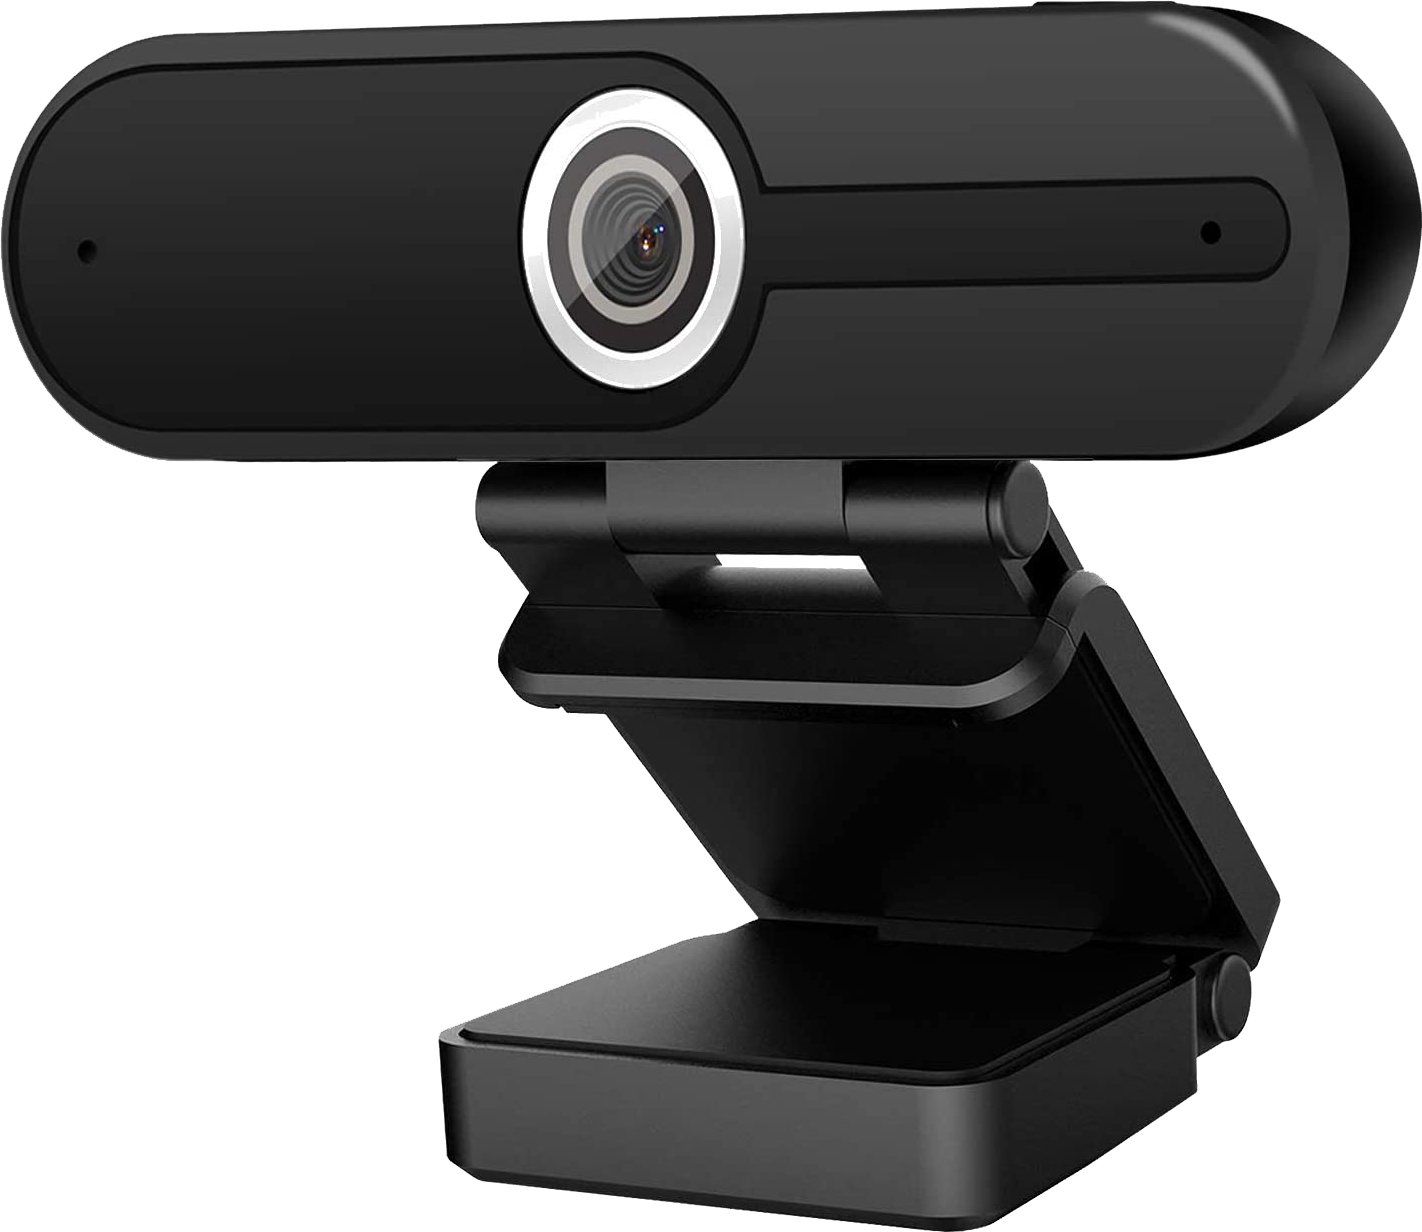 Adwaita 4k Webcam Render